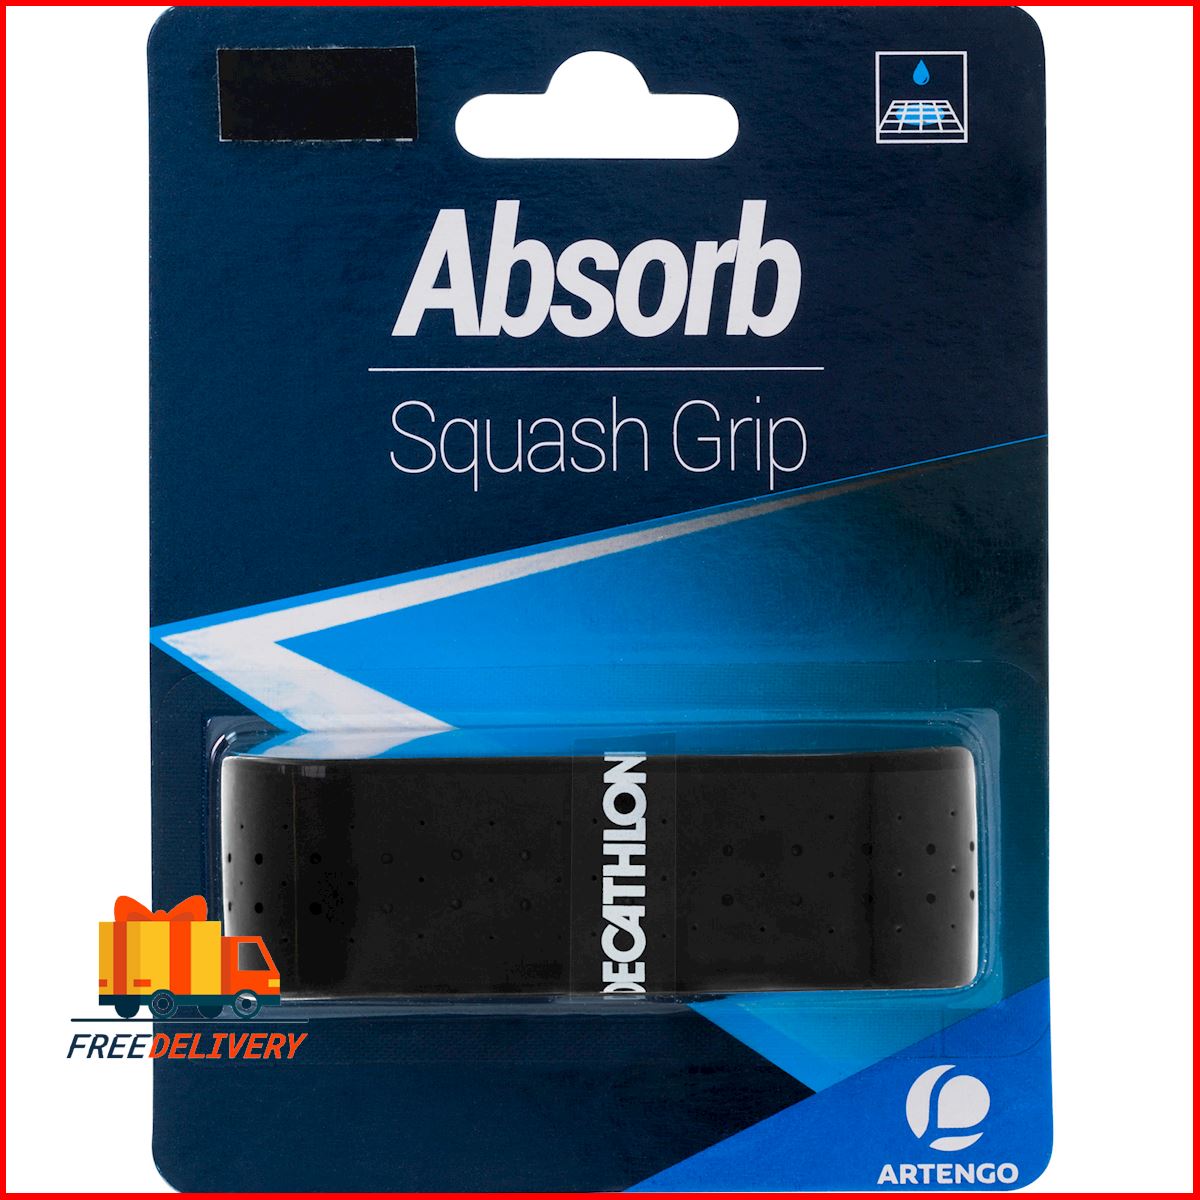 Absorb Squash Grip